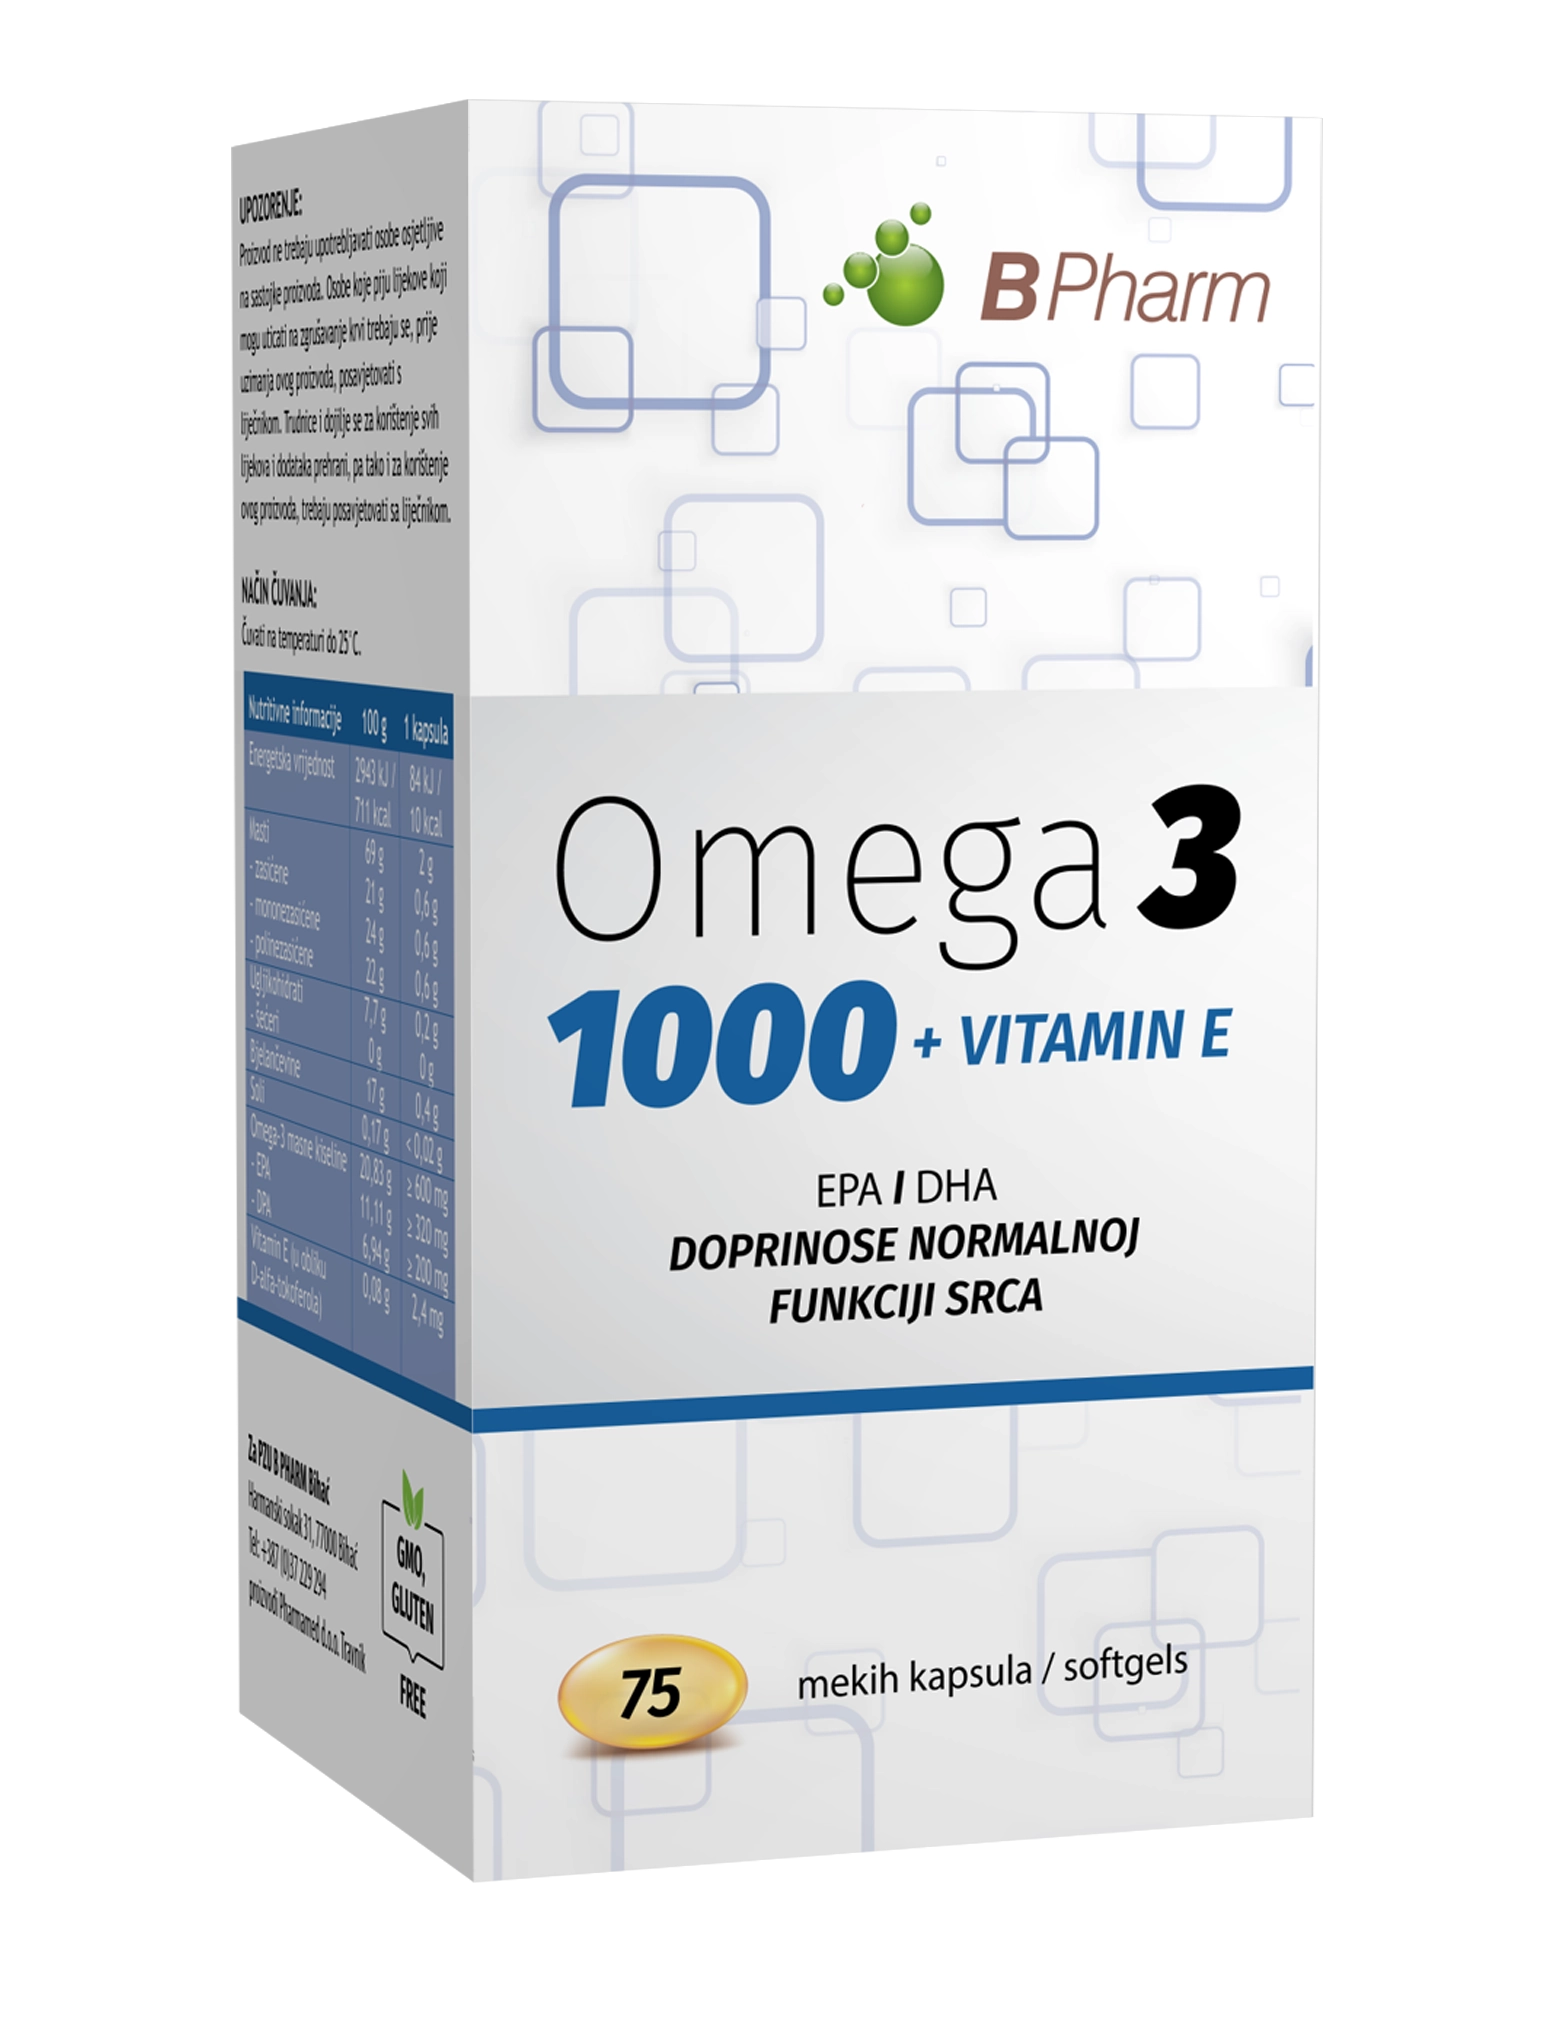 B Pharm Omega 3 kapsule